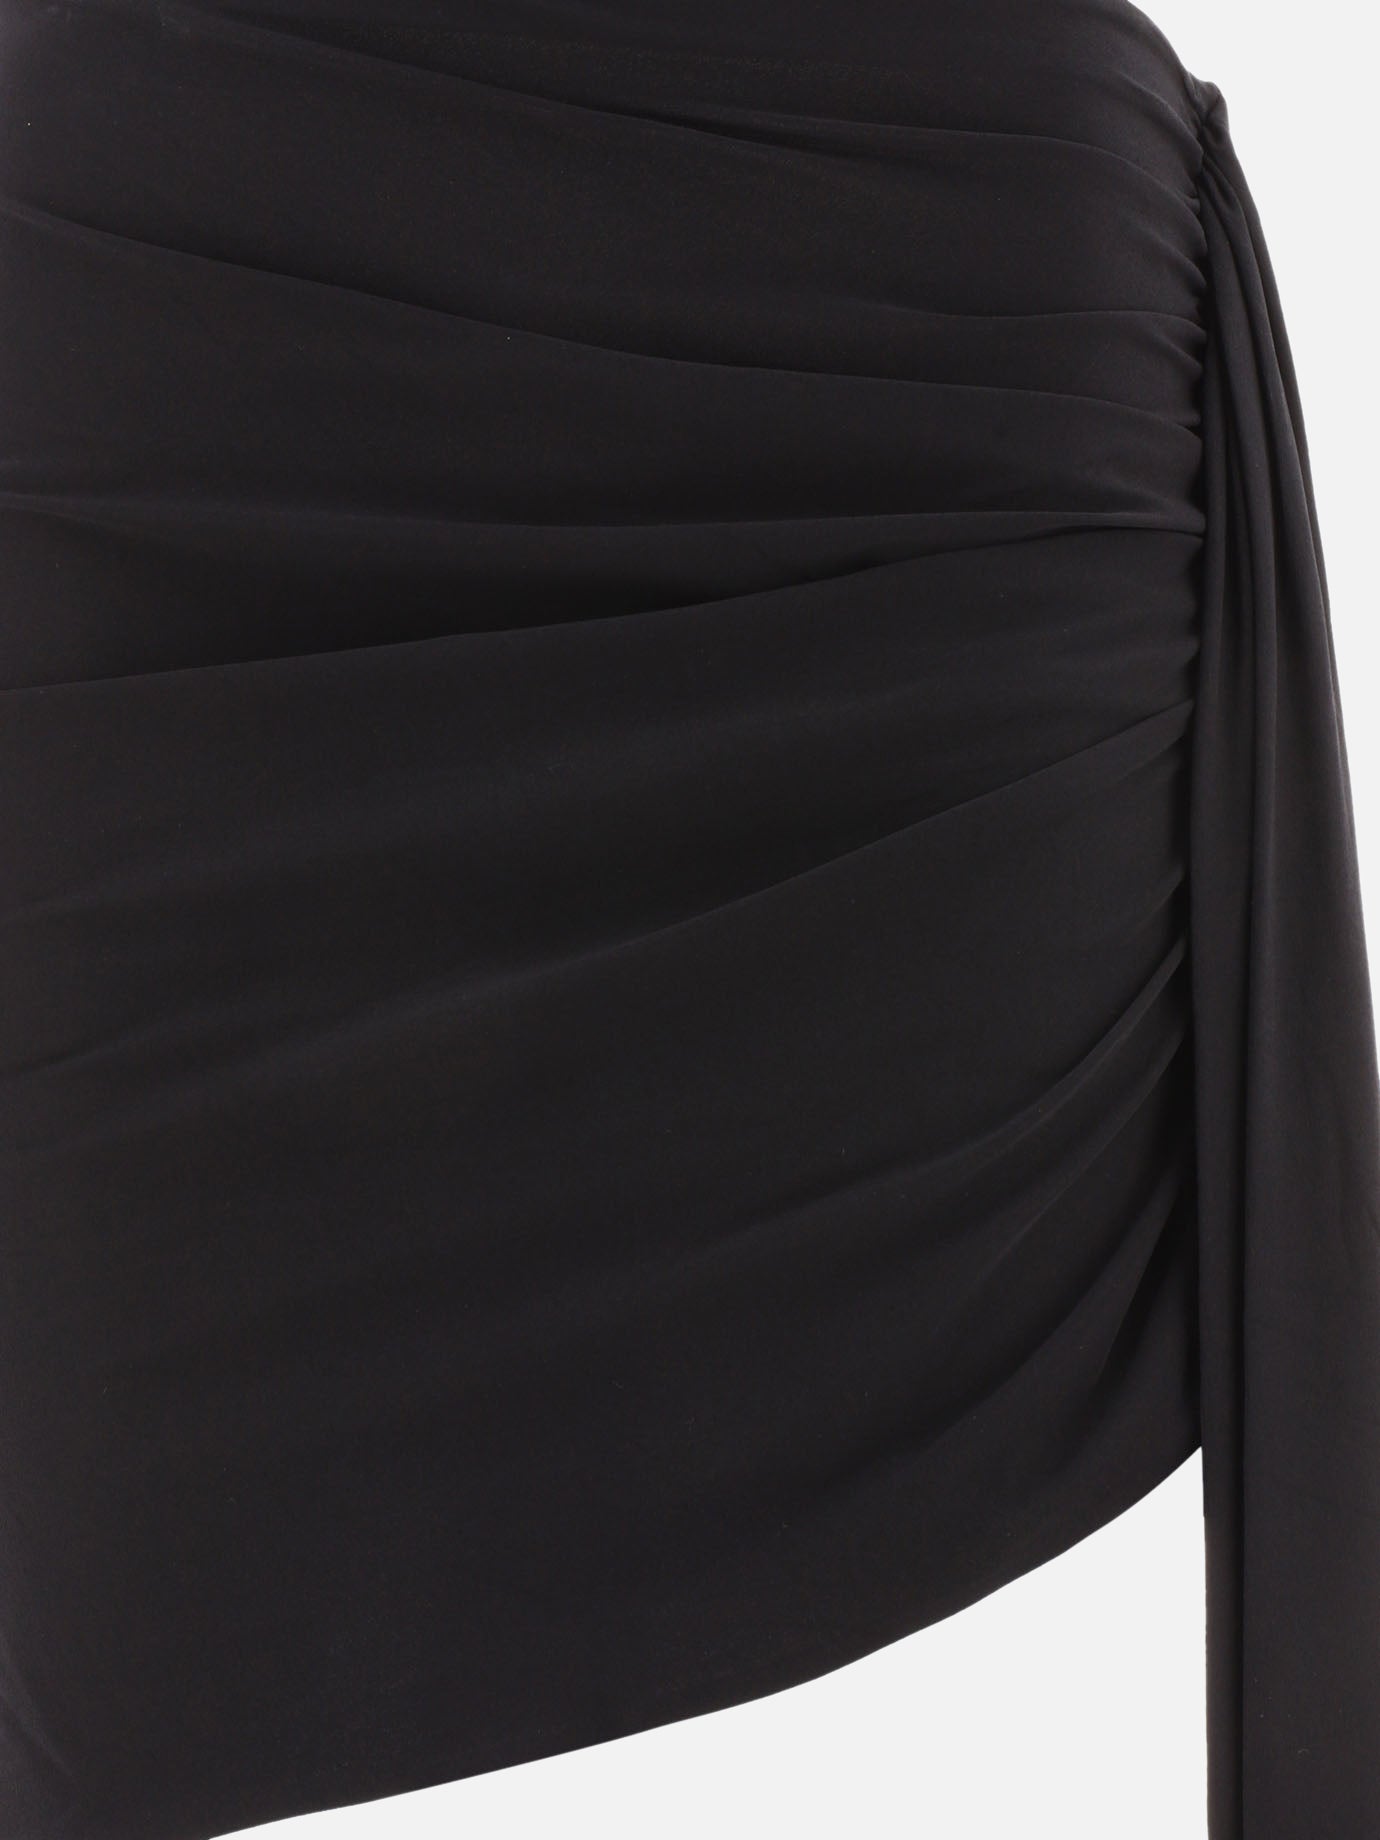 Asymmetrical sash skirt